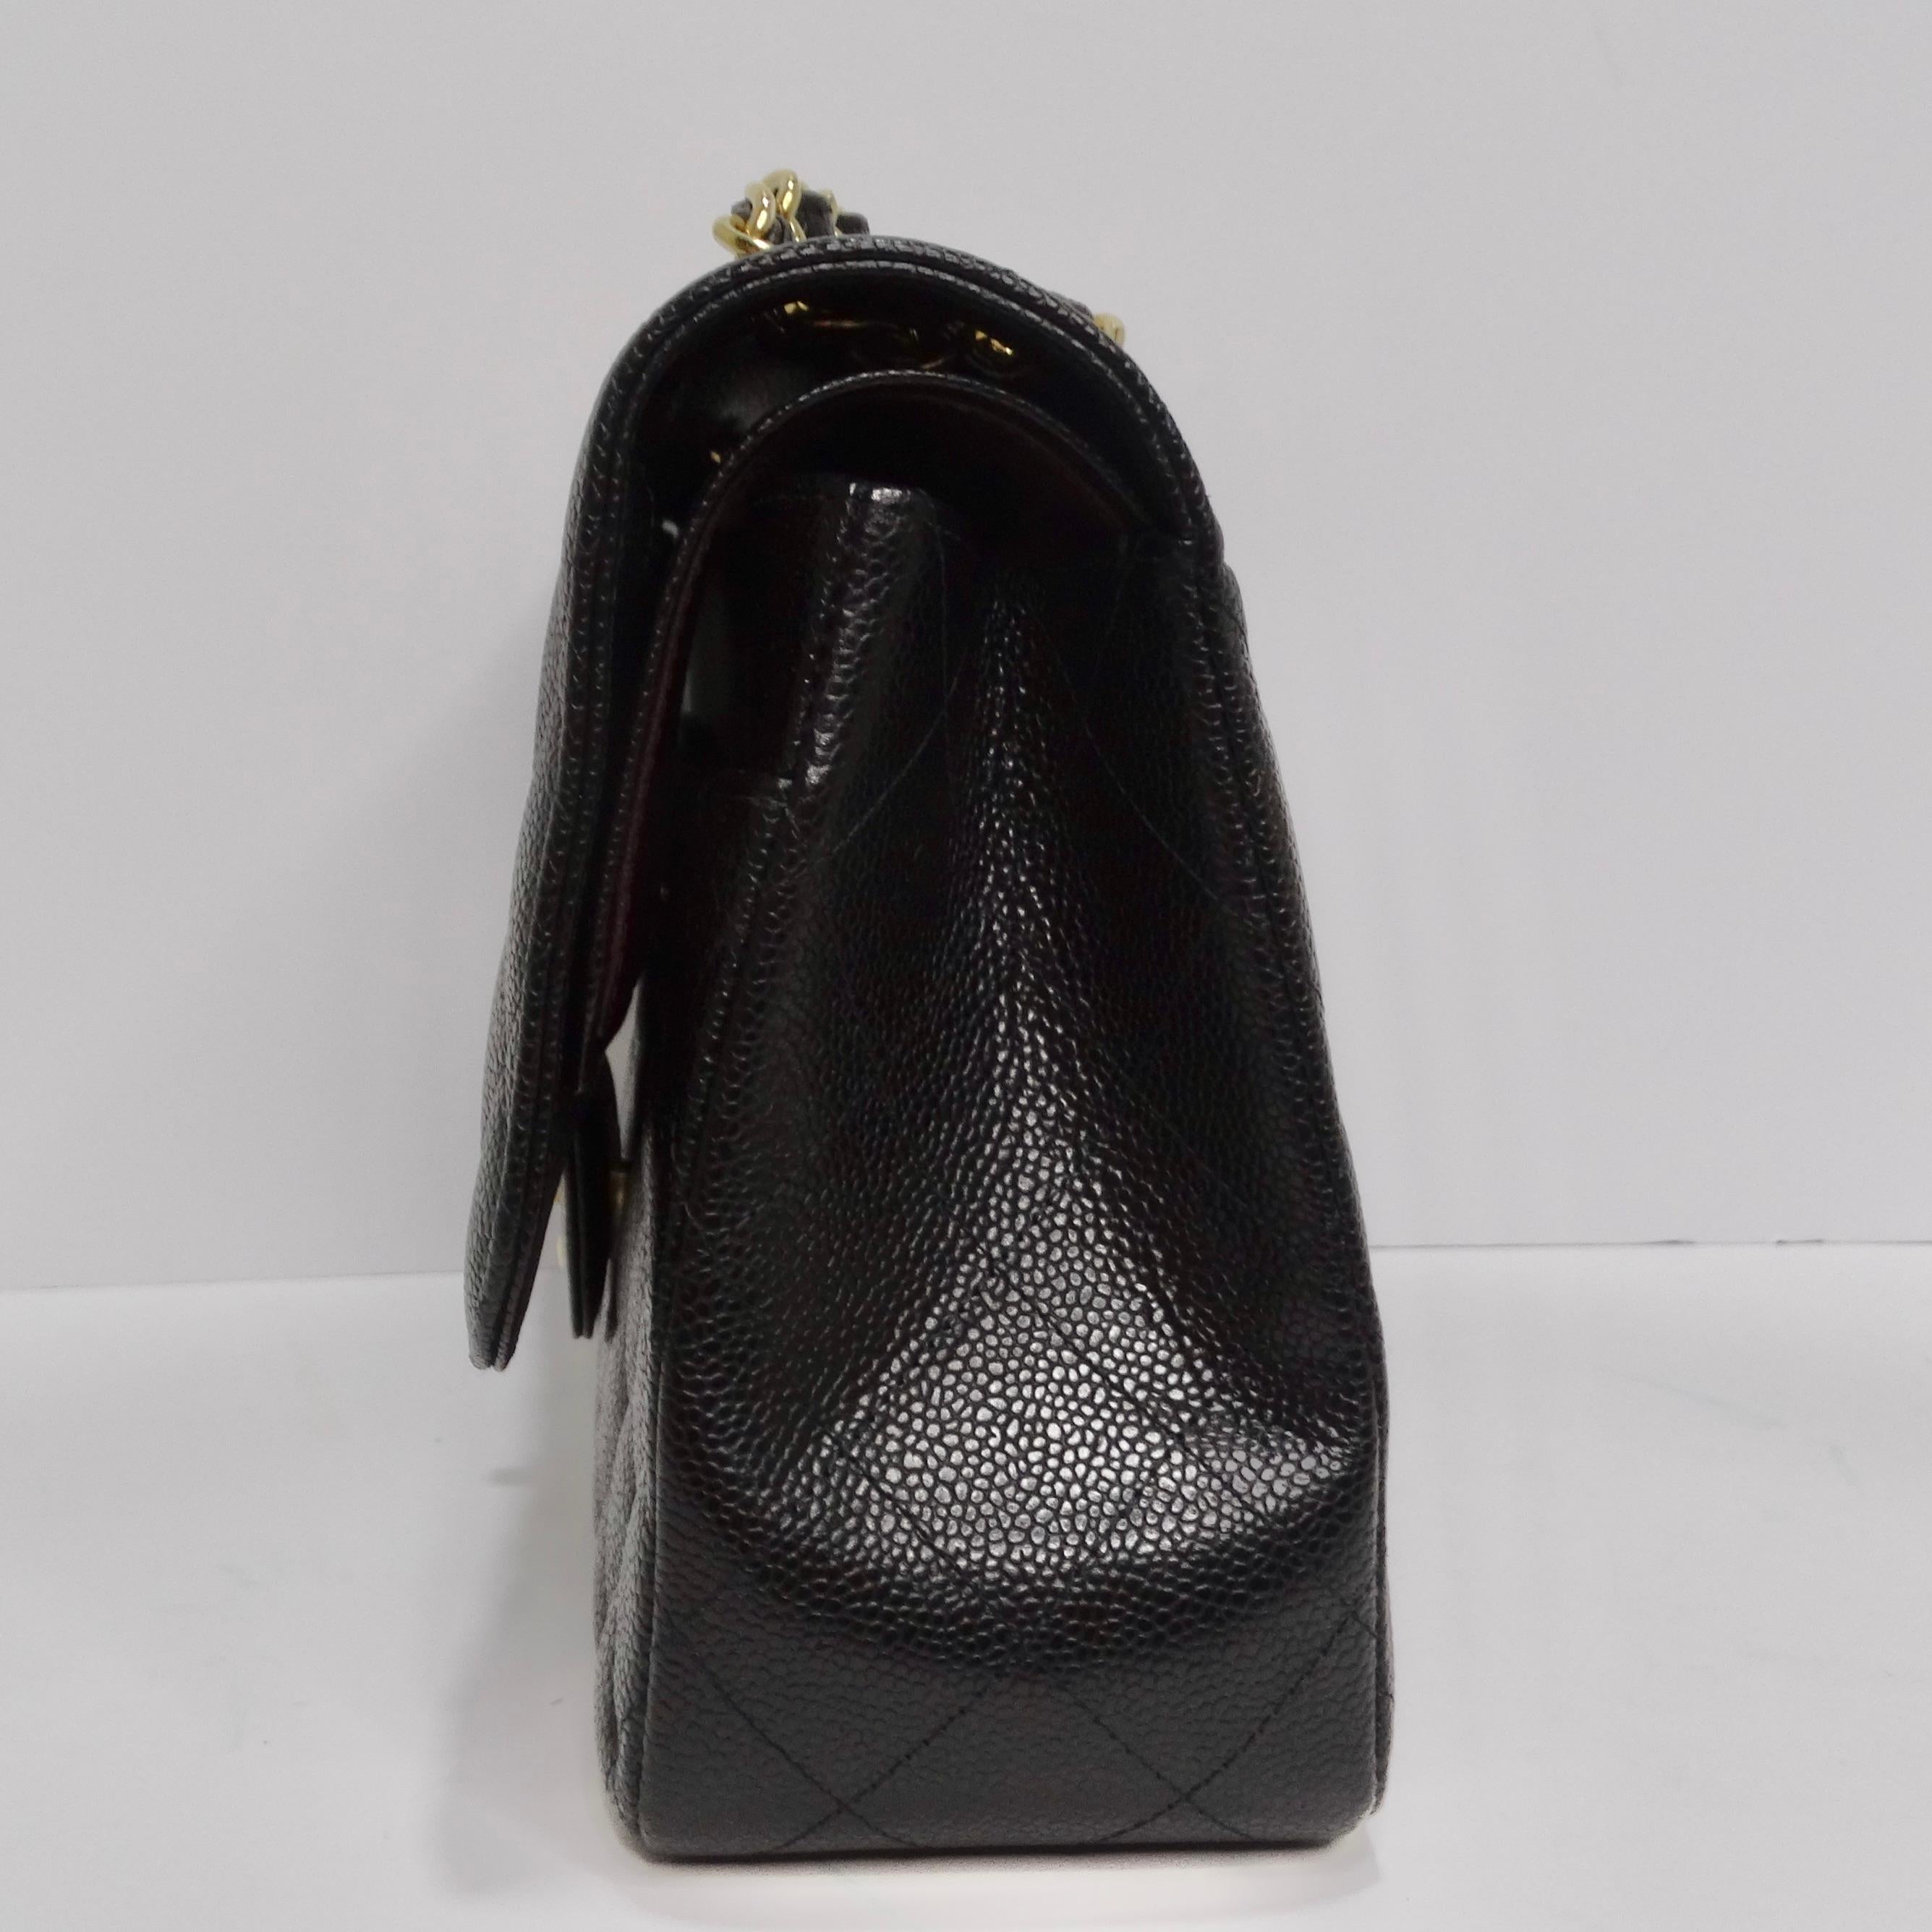 Chanel Large Classic Quilted Caviar Handbag Black/Burgundy 2